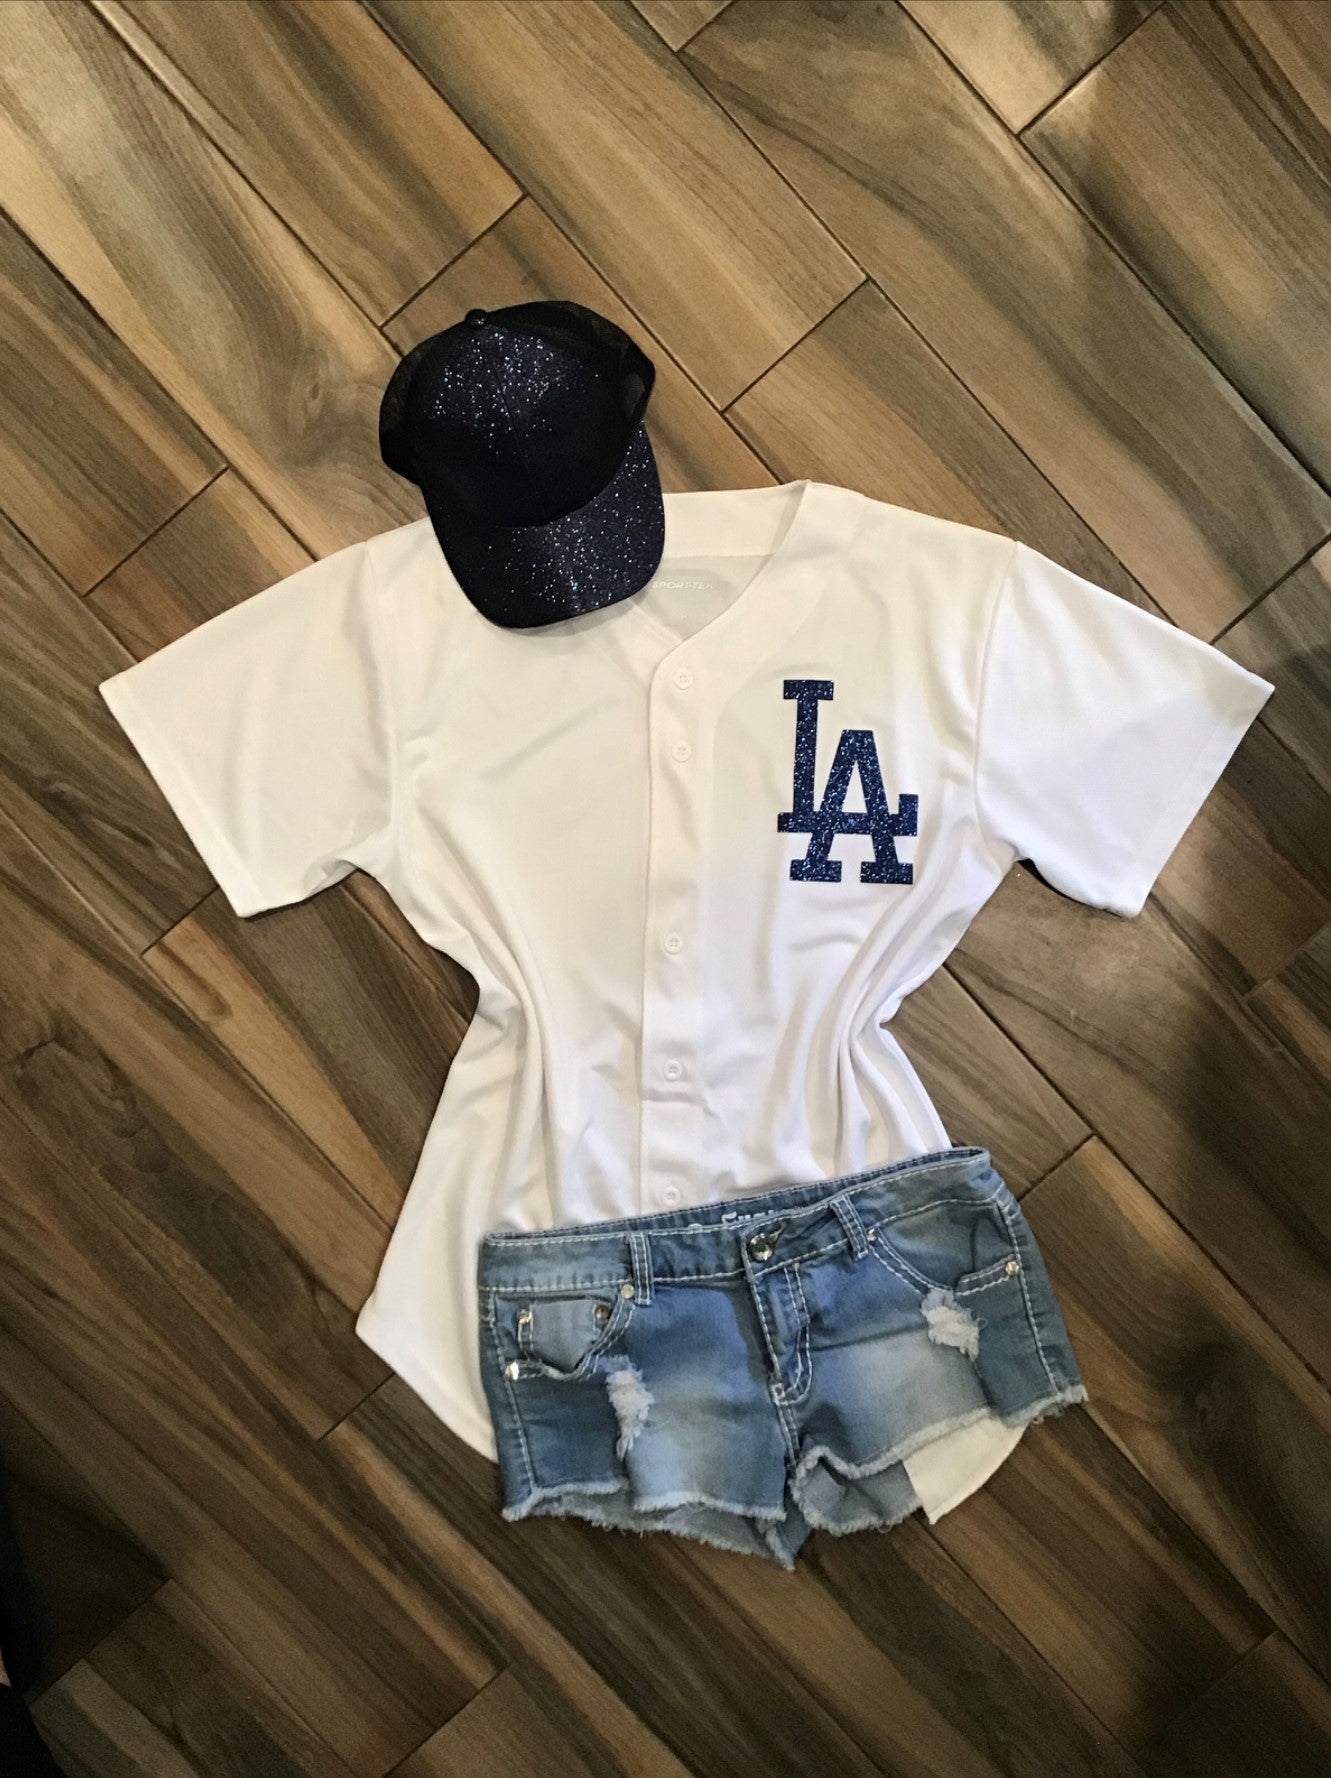 LA Dodgers Apparel & Gear.